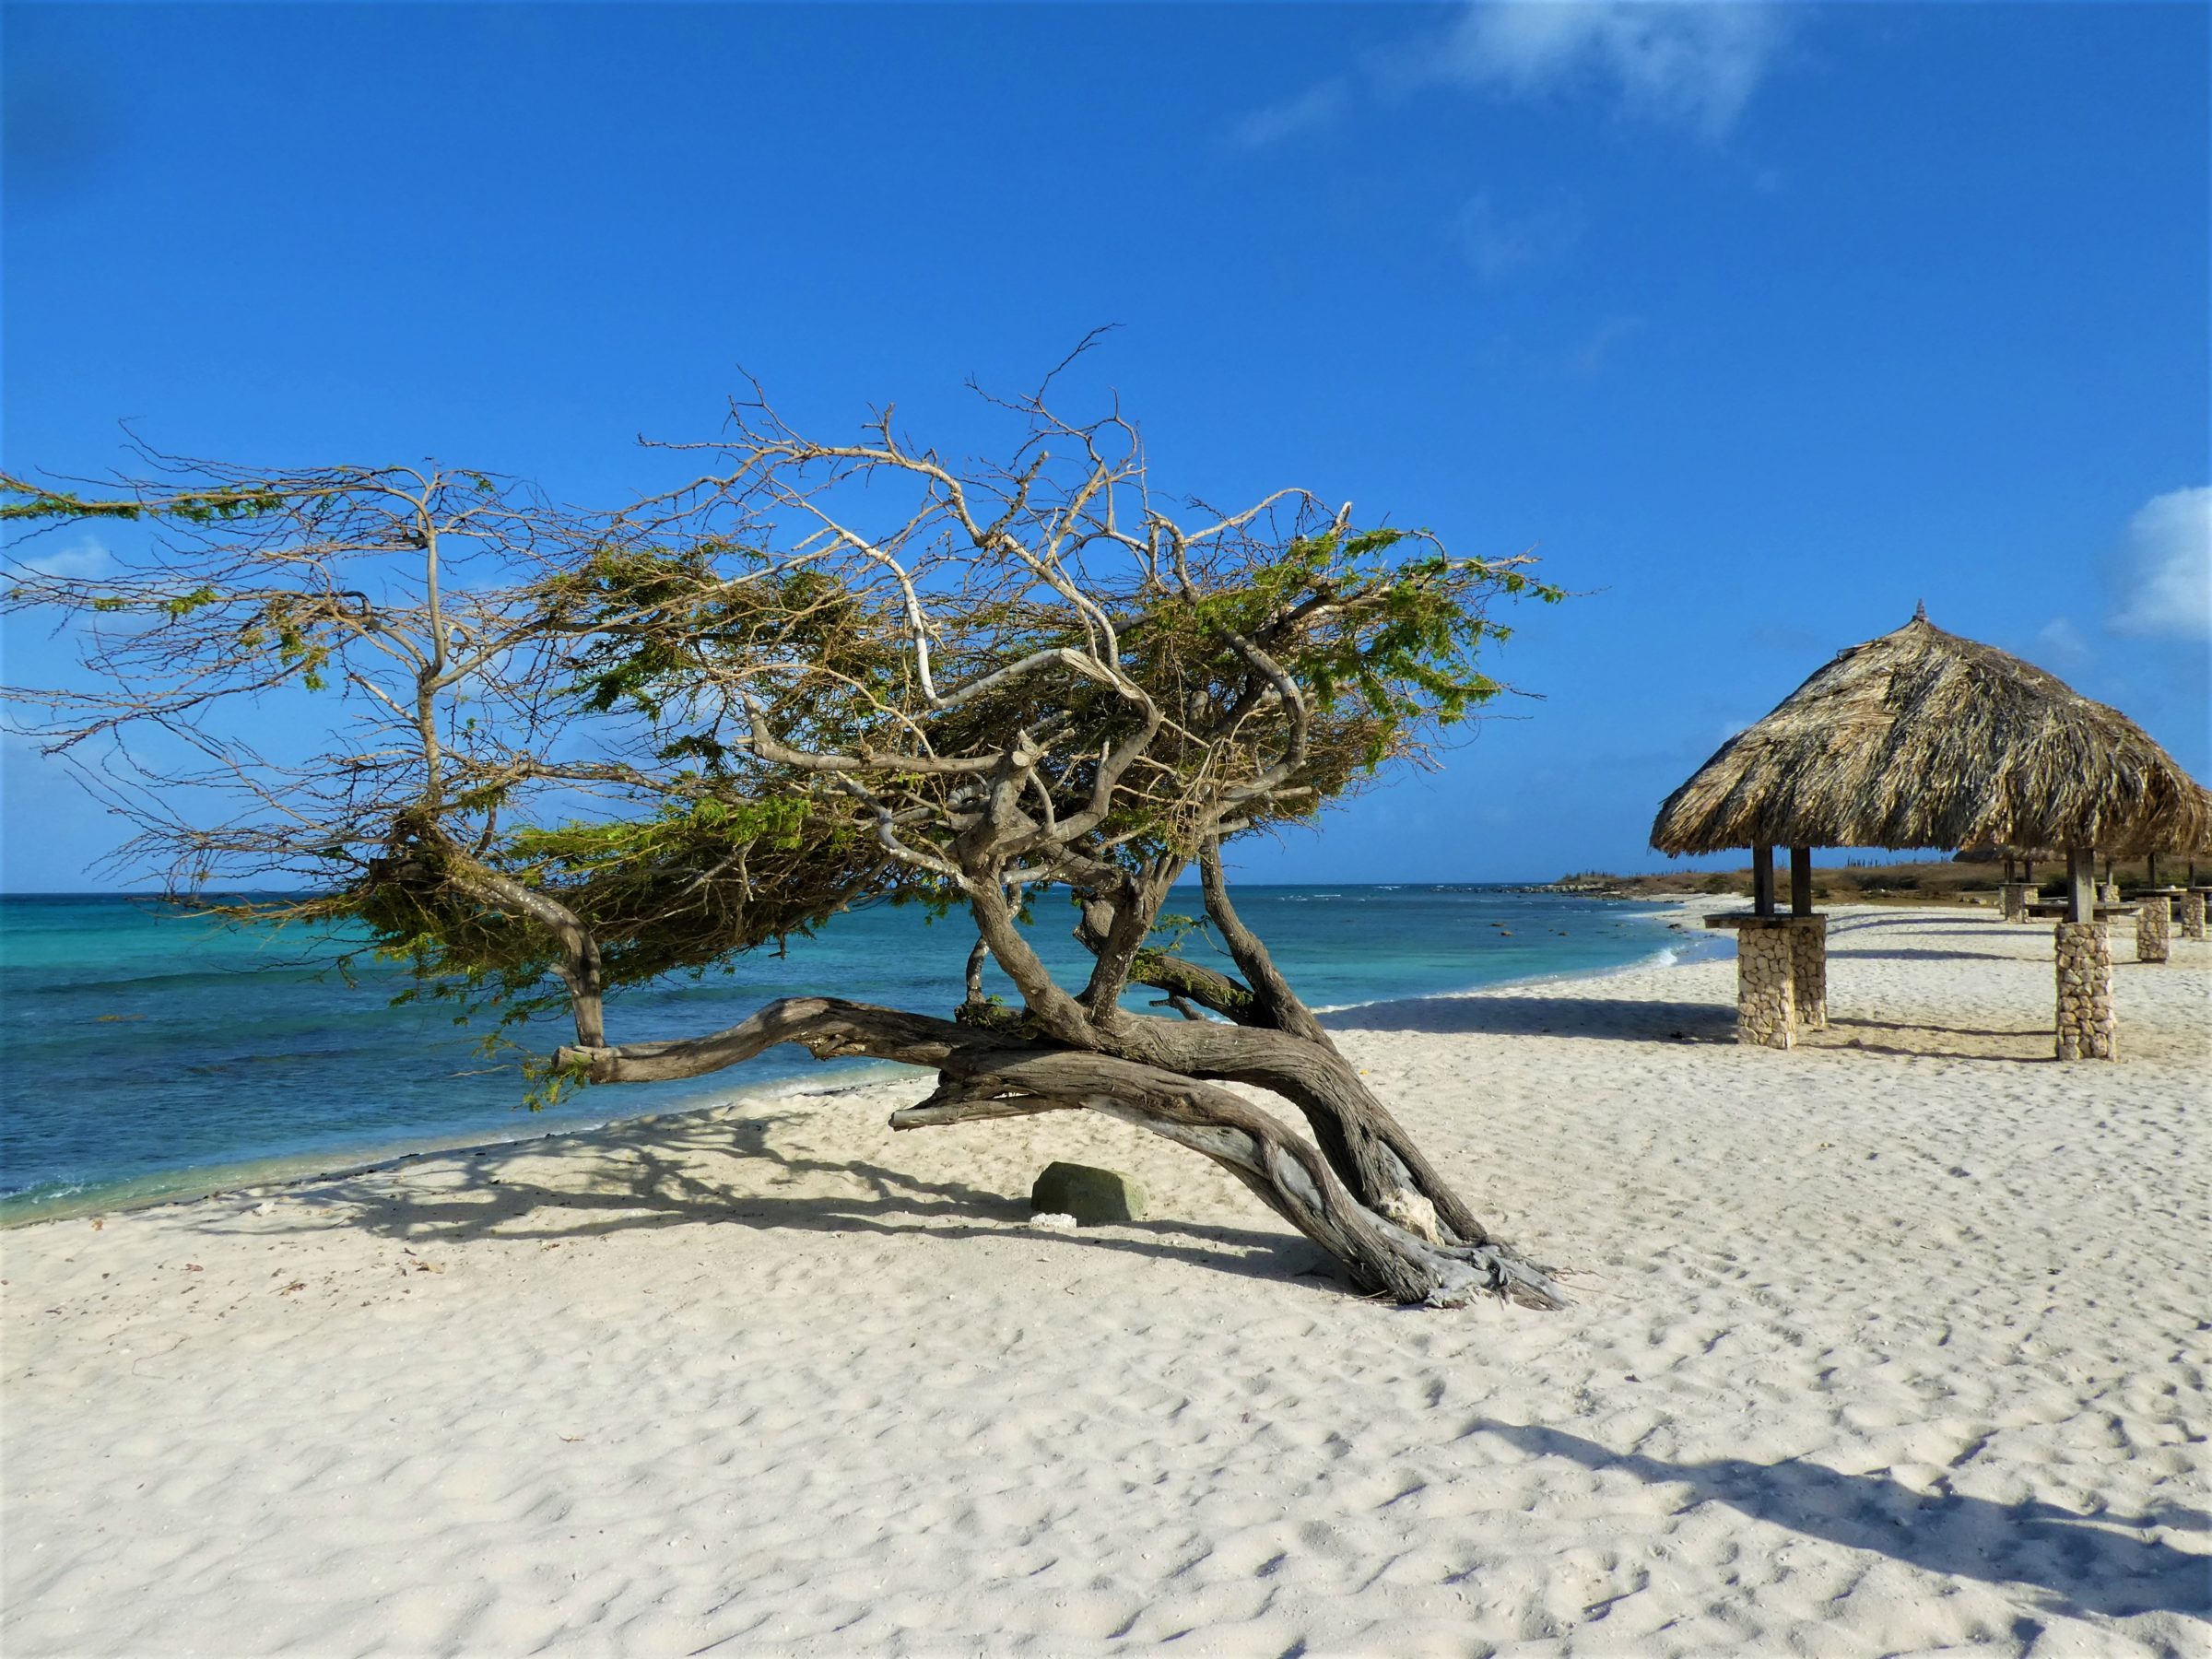 Divi-Divi Tree and cabana on the beach